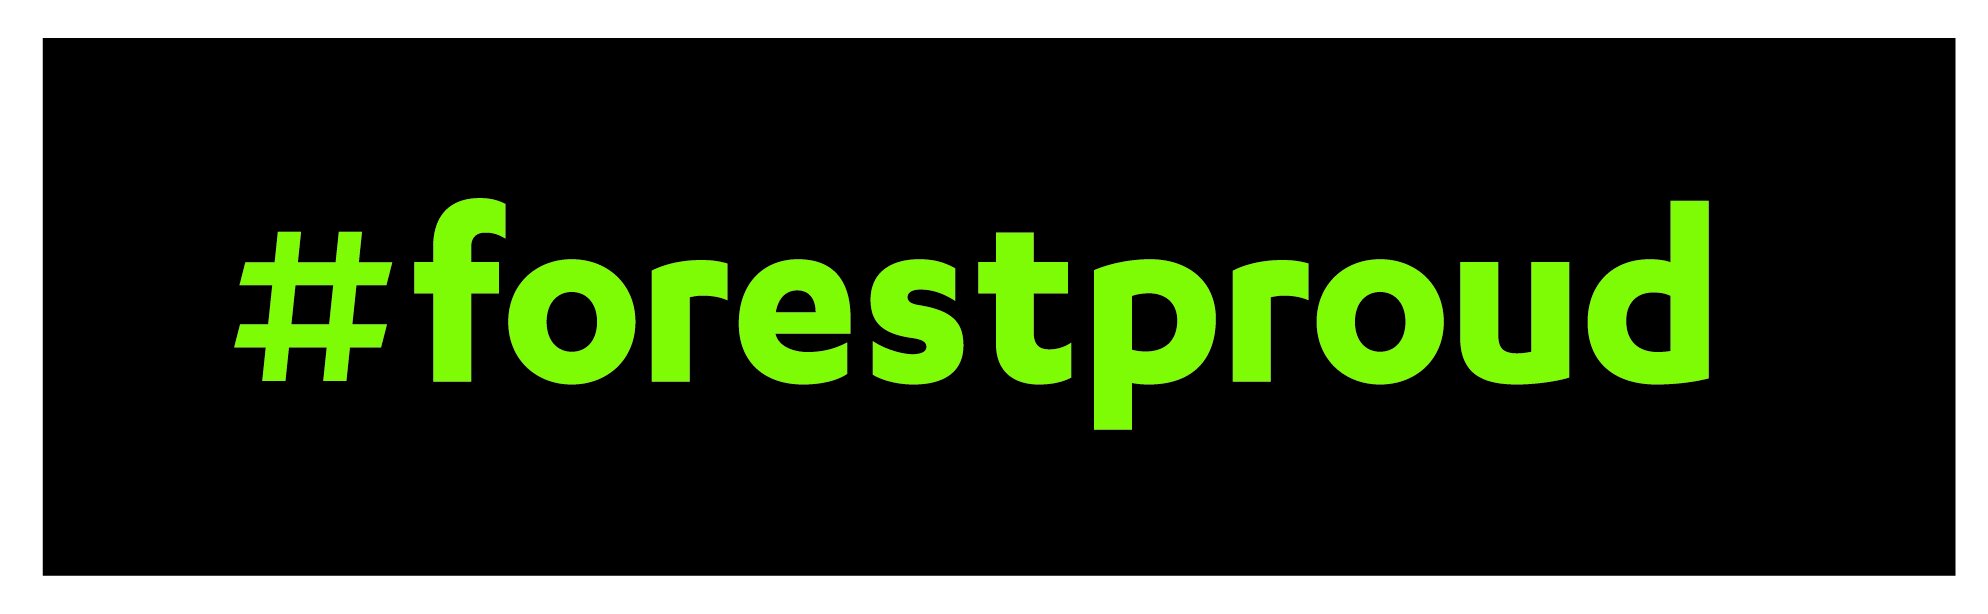 #forestproud_Logo_GreenOnBlack_CMYK.jpg